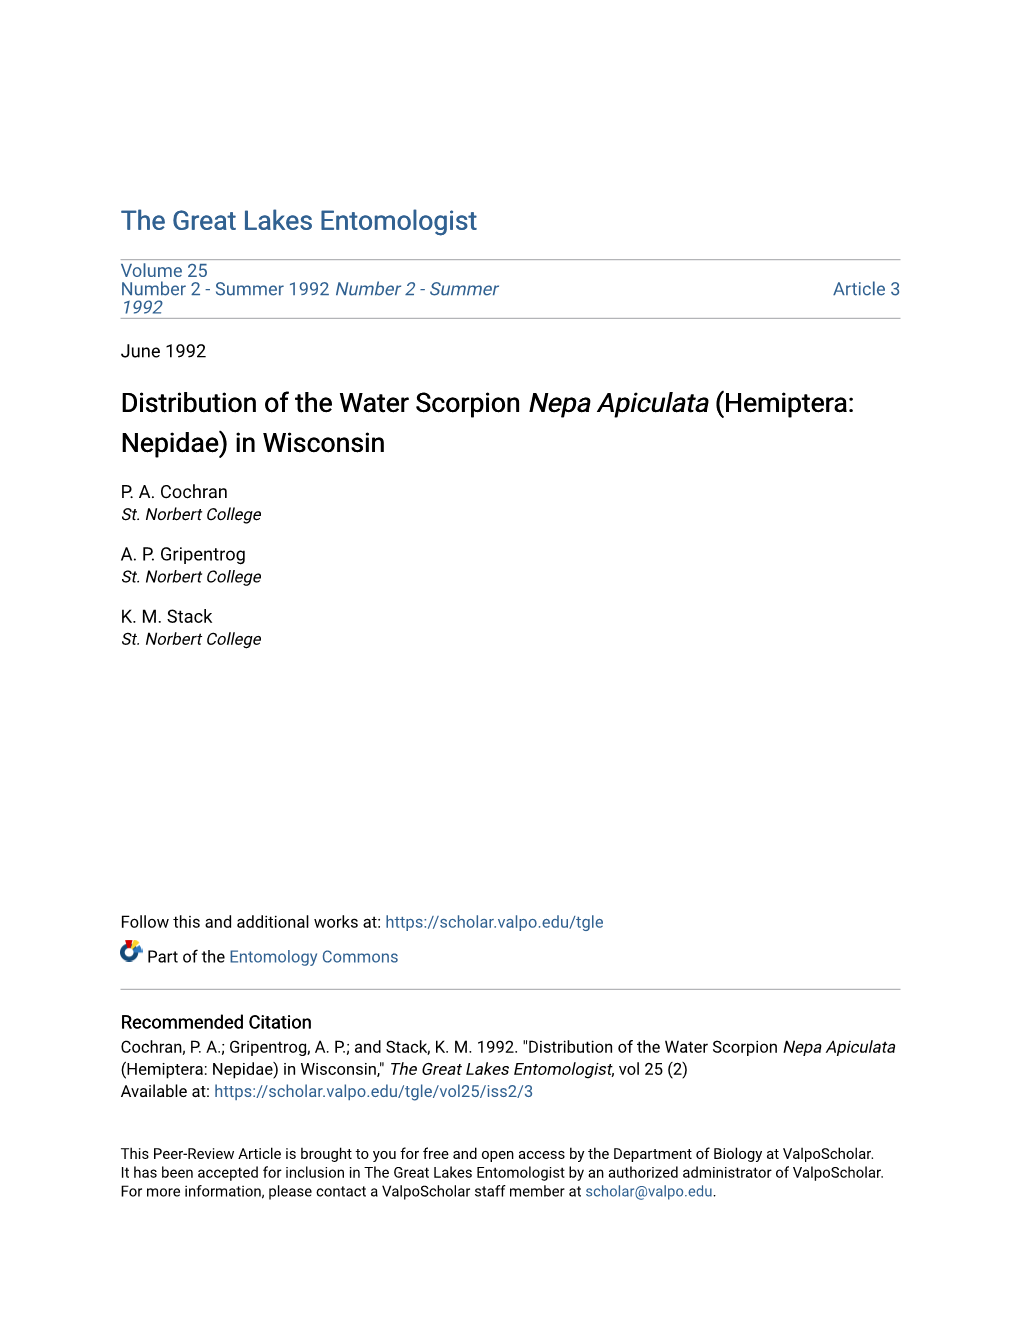 Distribution of the Water Scorpion Nepa Apiculata (Hemiptera: Nepidae) in Wisconsin